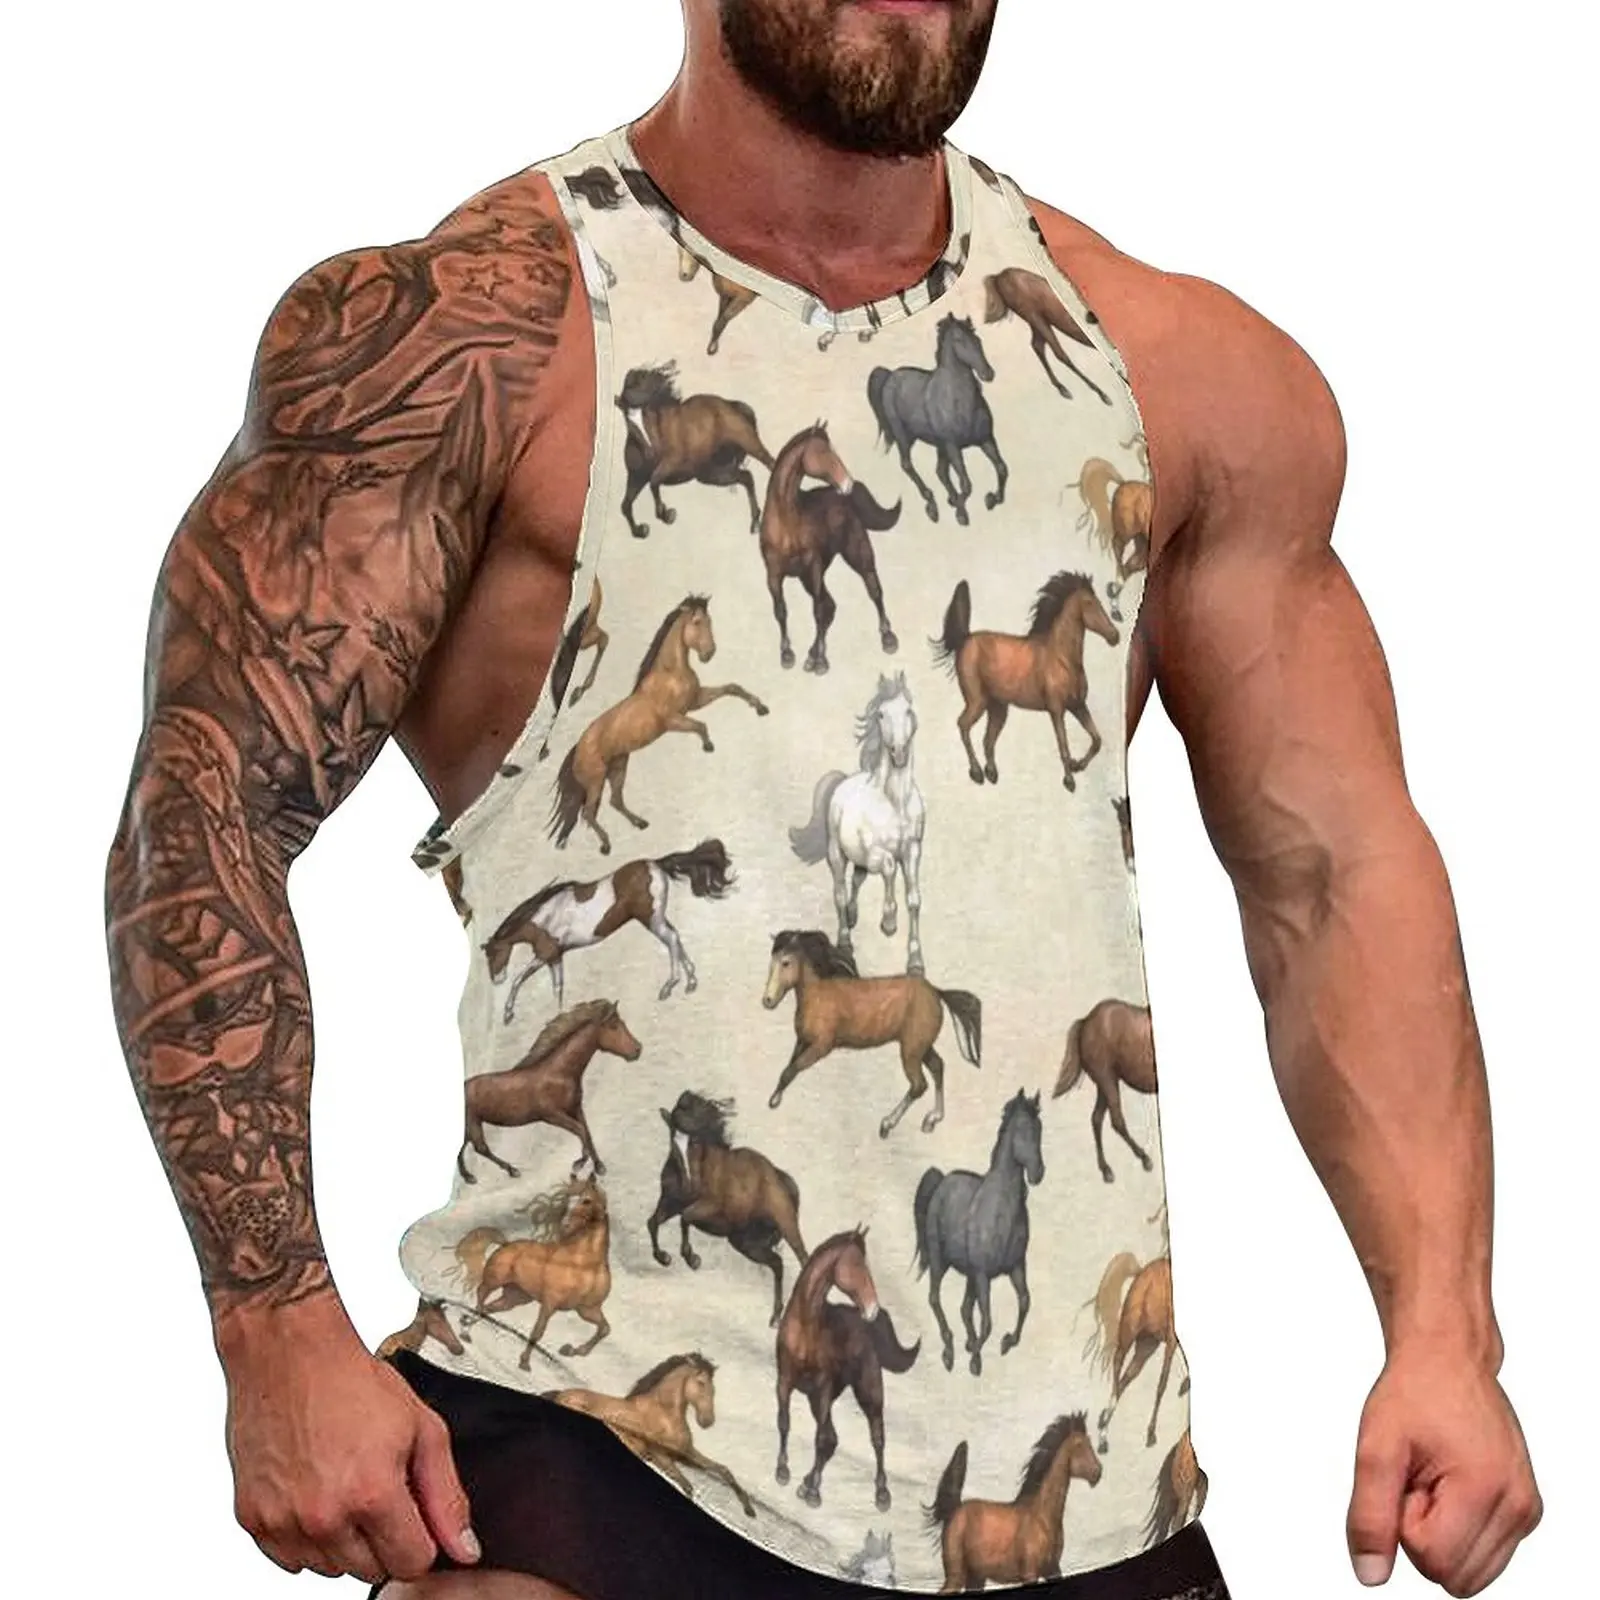 

Sunset Horse Tank Top Males Cool Animal Print Tops Beach Custom Bodybuilding Cool Oversized Sleeveless Vests